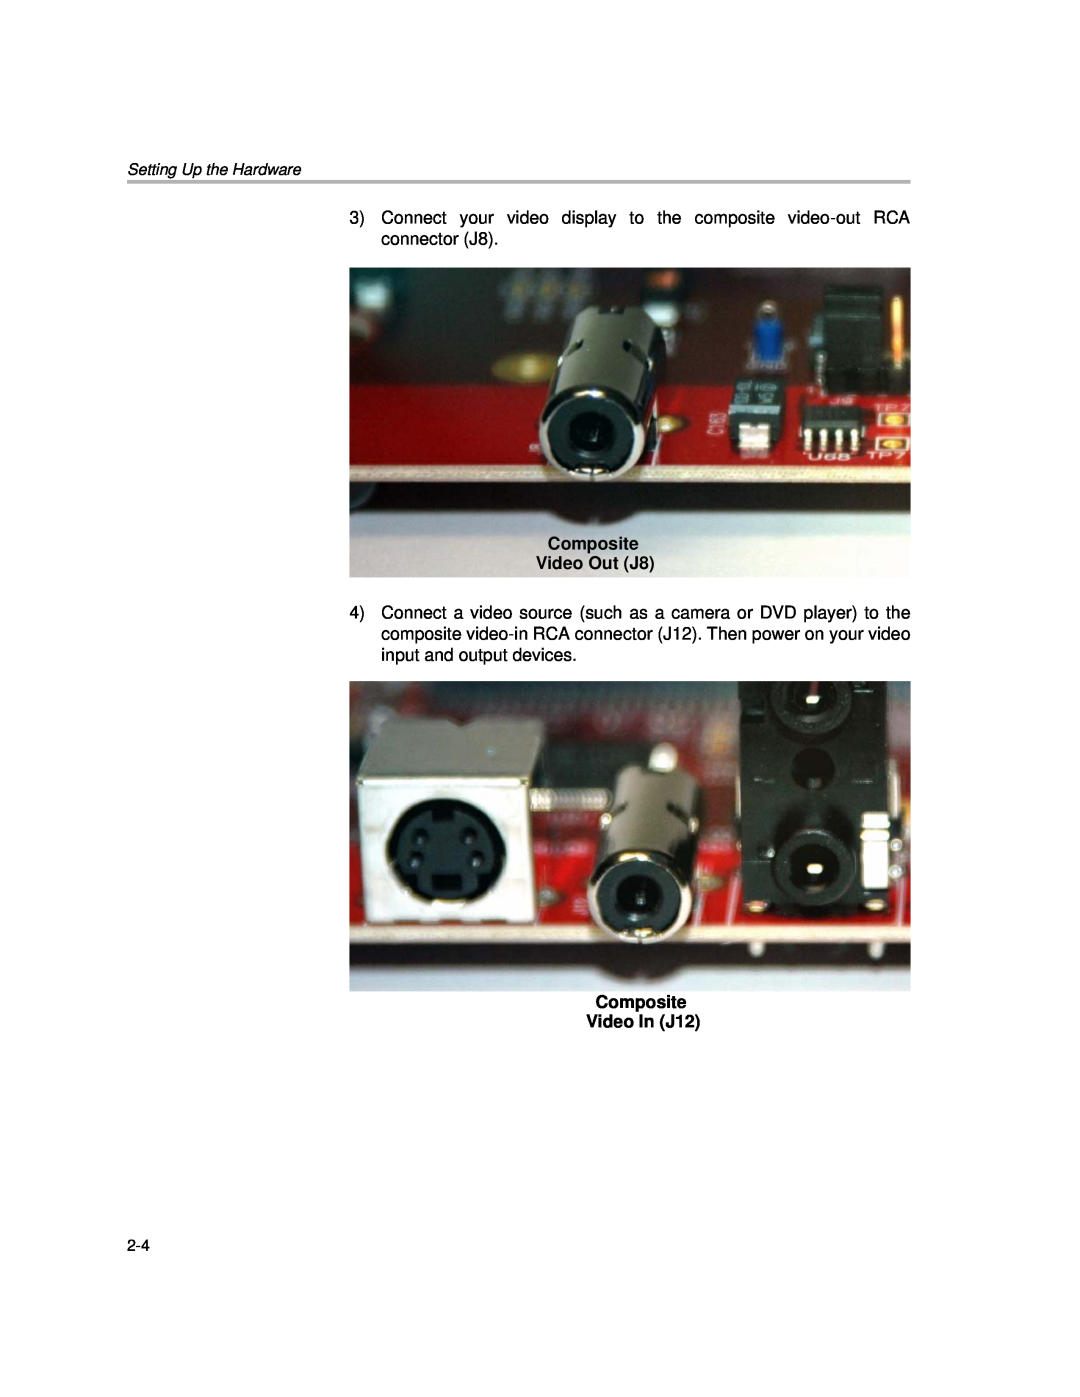 Texas Instruments TMS320DM357 DVEVM v2.05 manual Composite Video Out J8, Composite Video In J12 